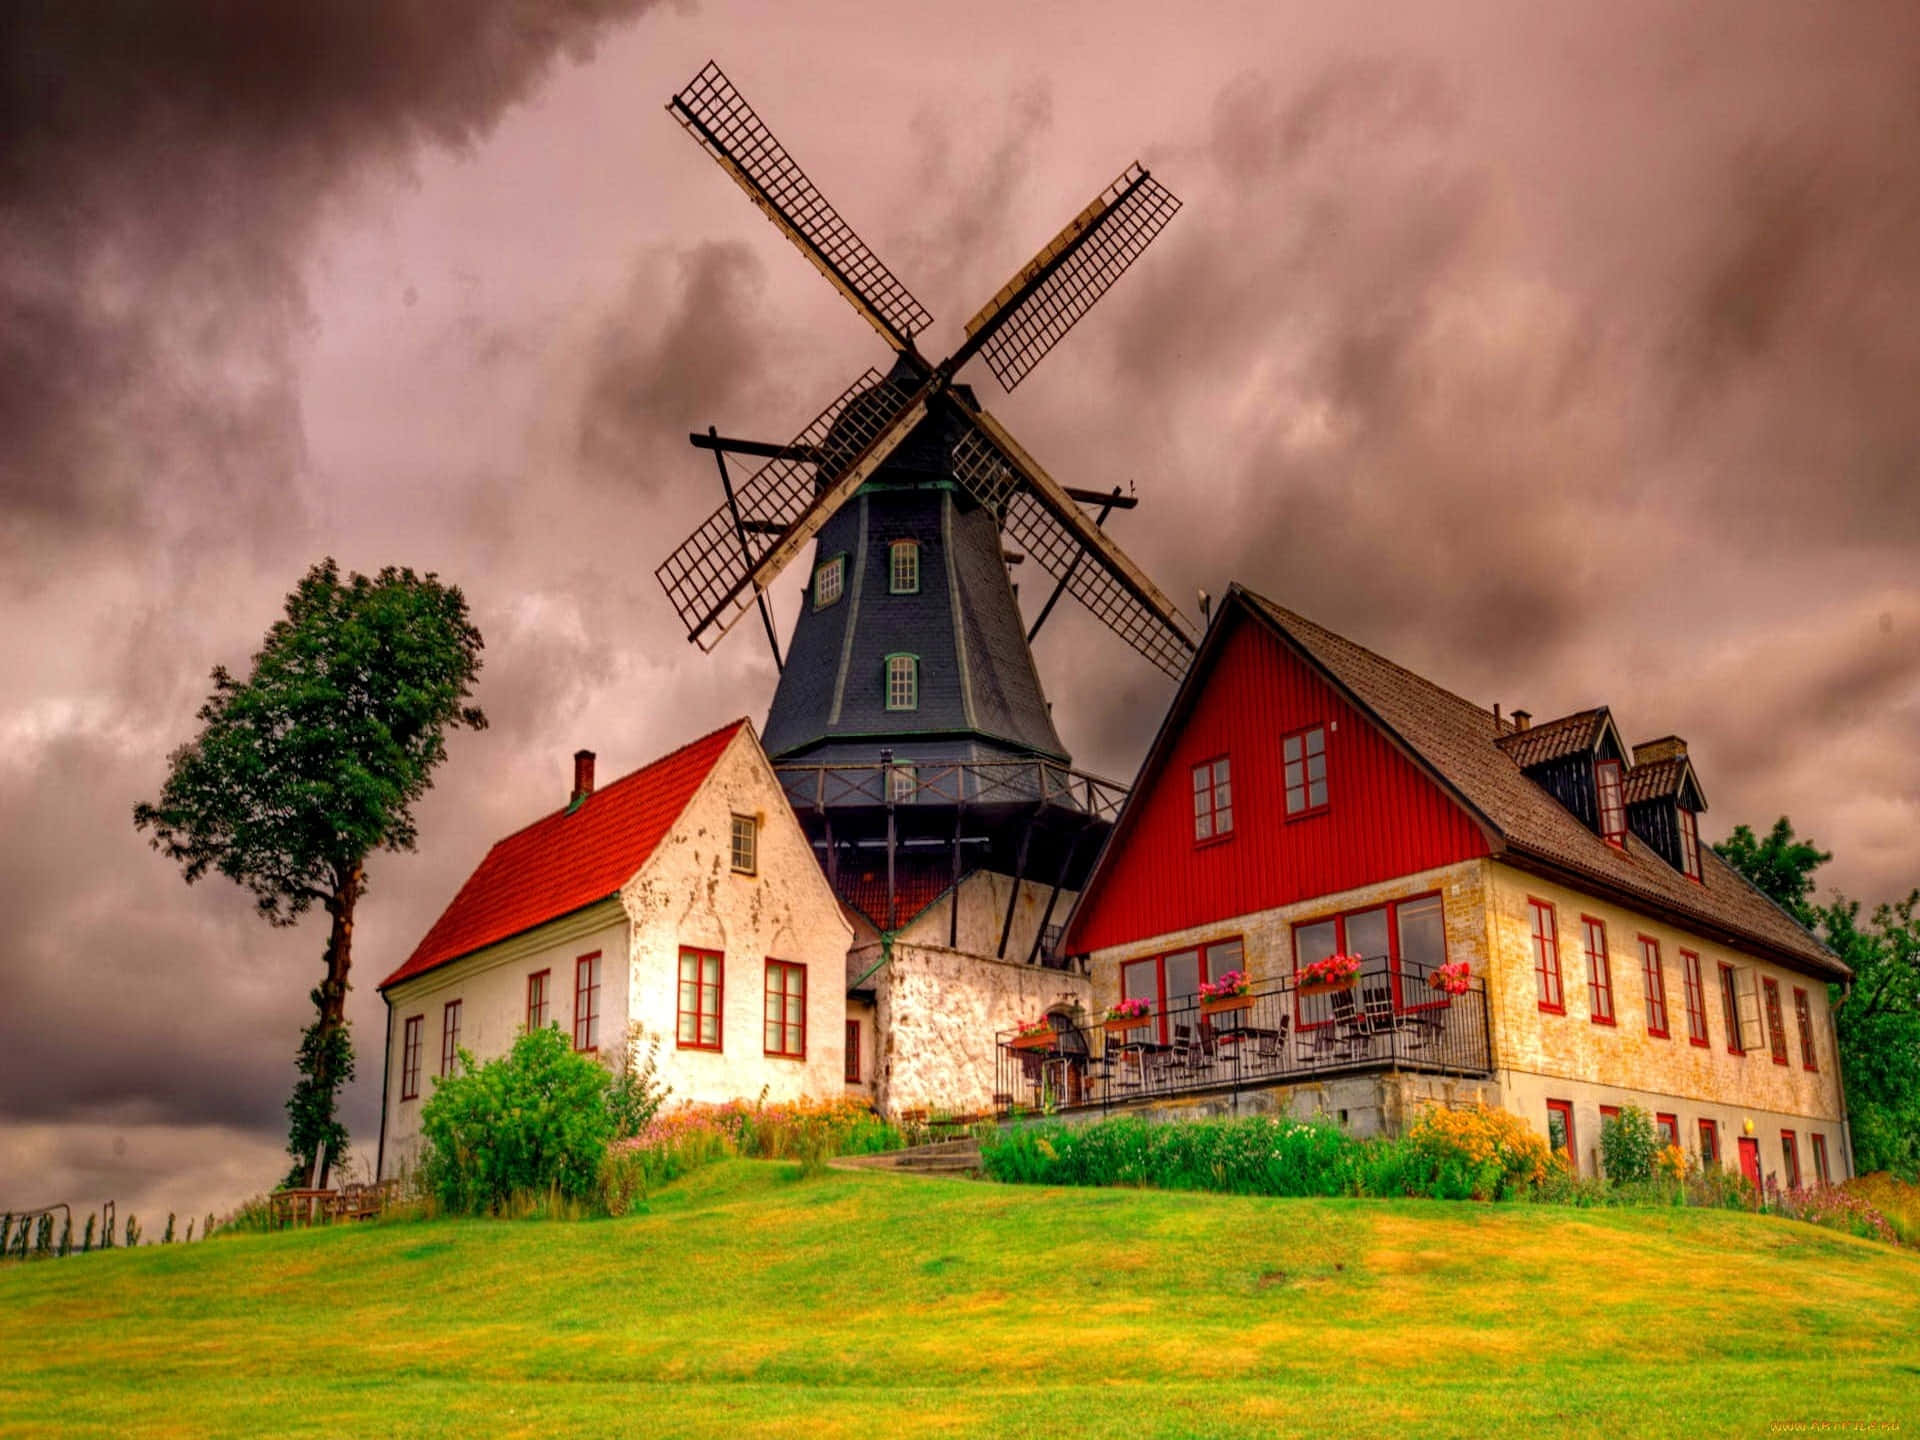 Enchanting Windmill against a vivid skyline